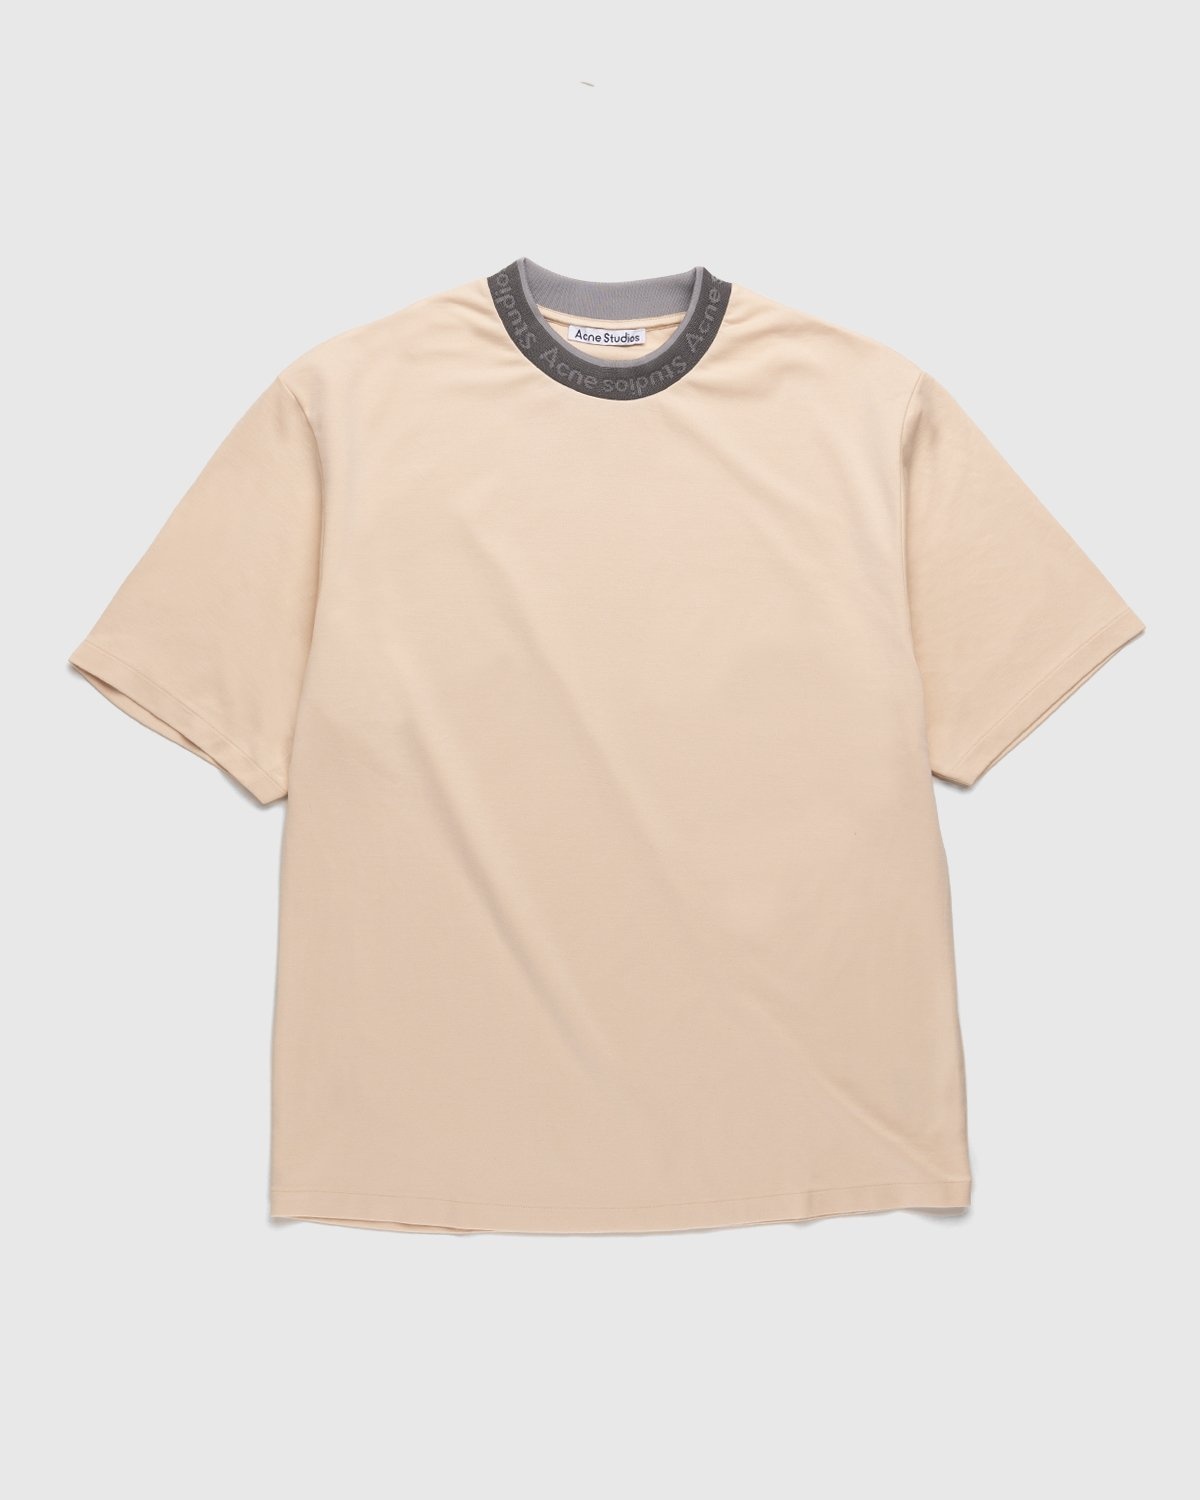 Acne Studios – Logo Collar T-Shirt Cream Beige - Tops - Beige - Image 1